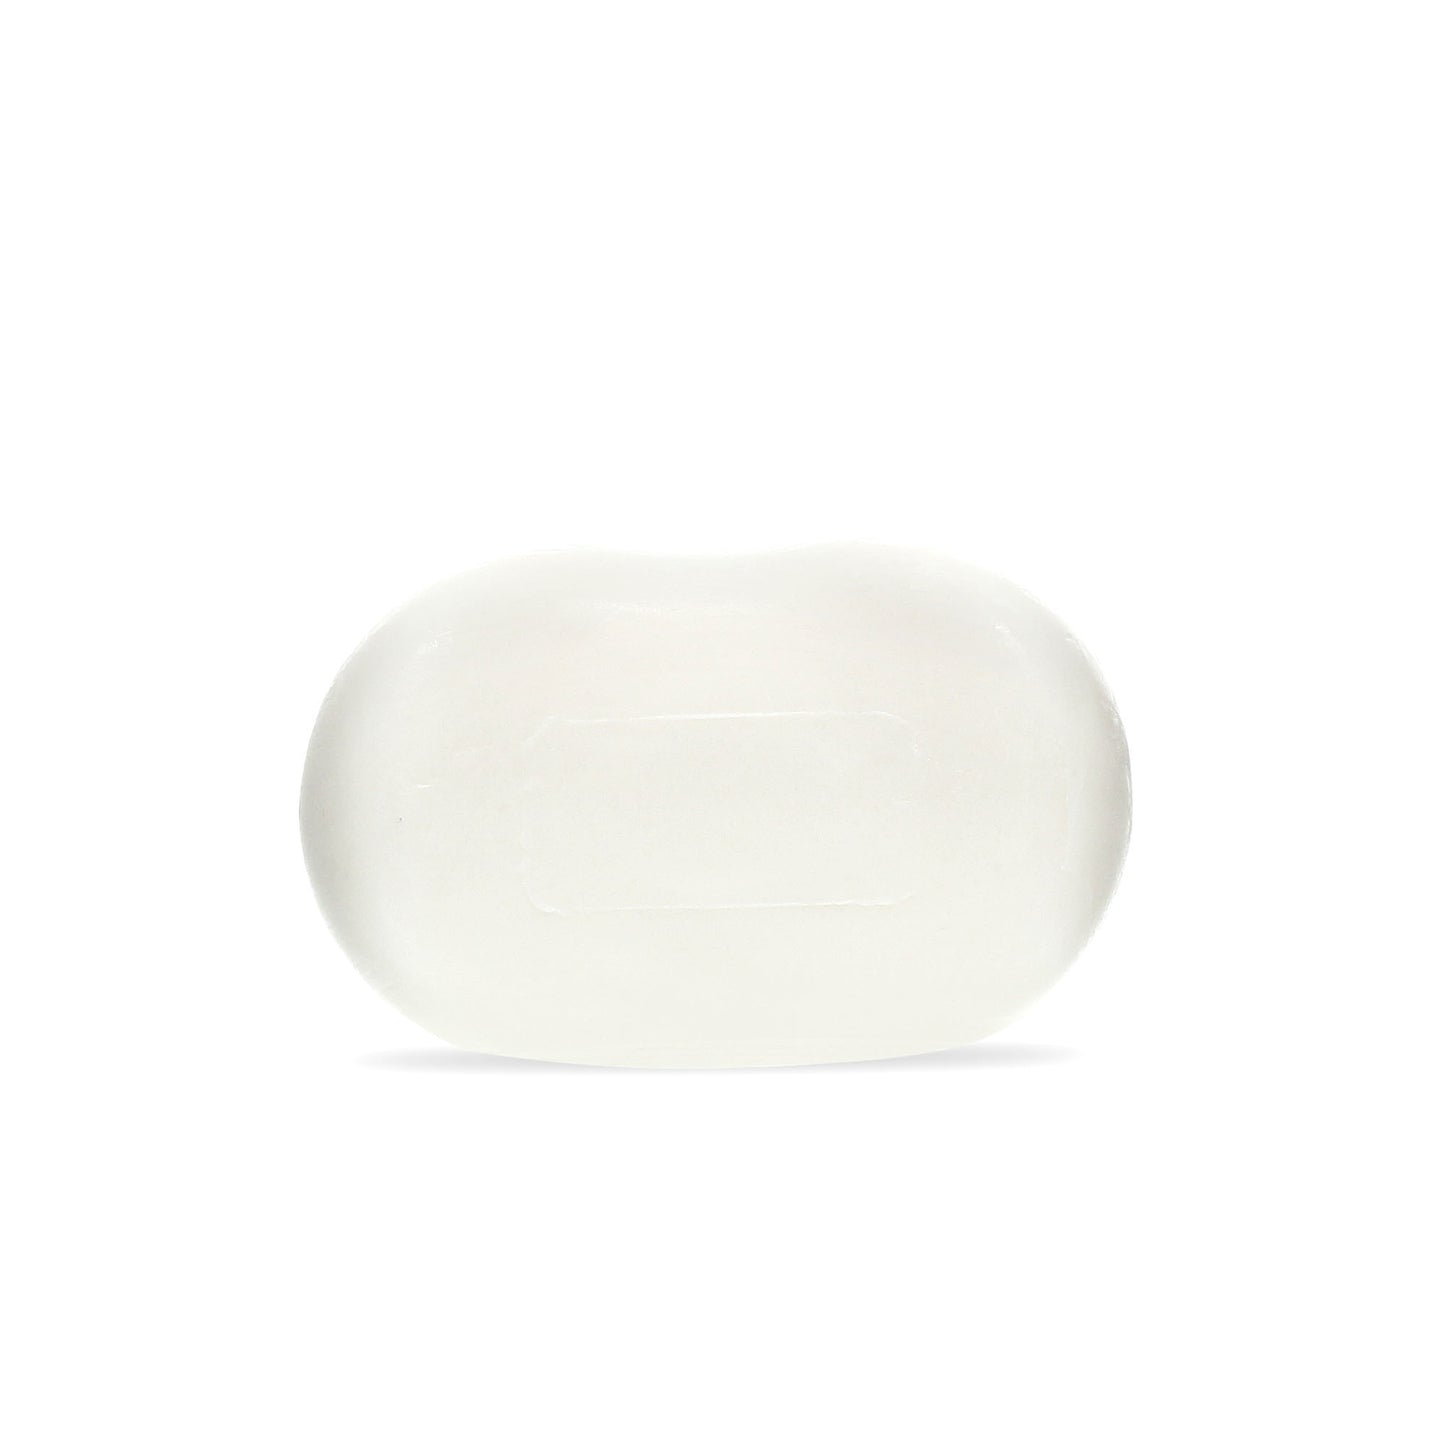 White Dove Baby Milk Soap 100 g